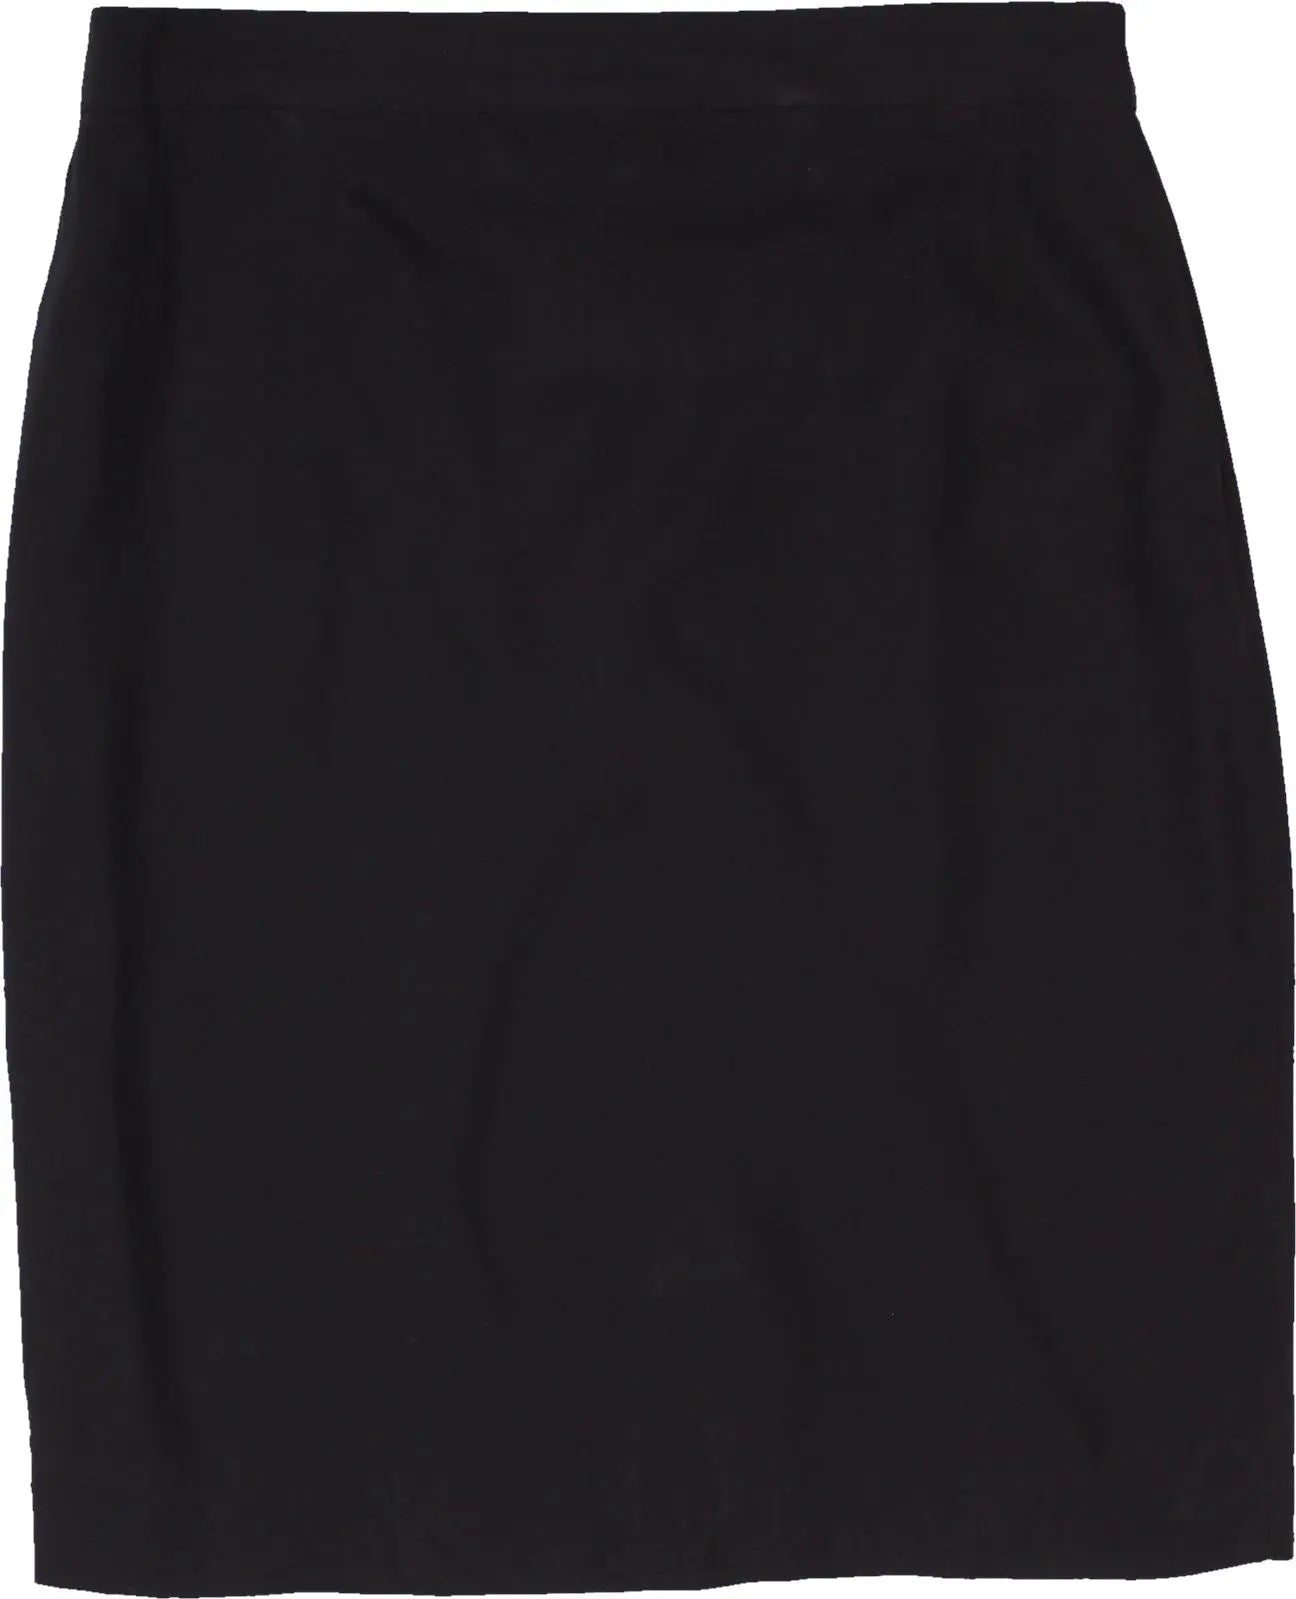 Escada - Black 100% Silk Skirt by Escada- ThriftTale.com - Vintage and second handclothing